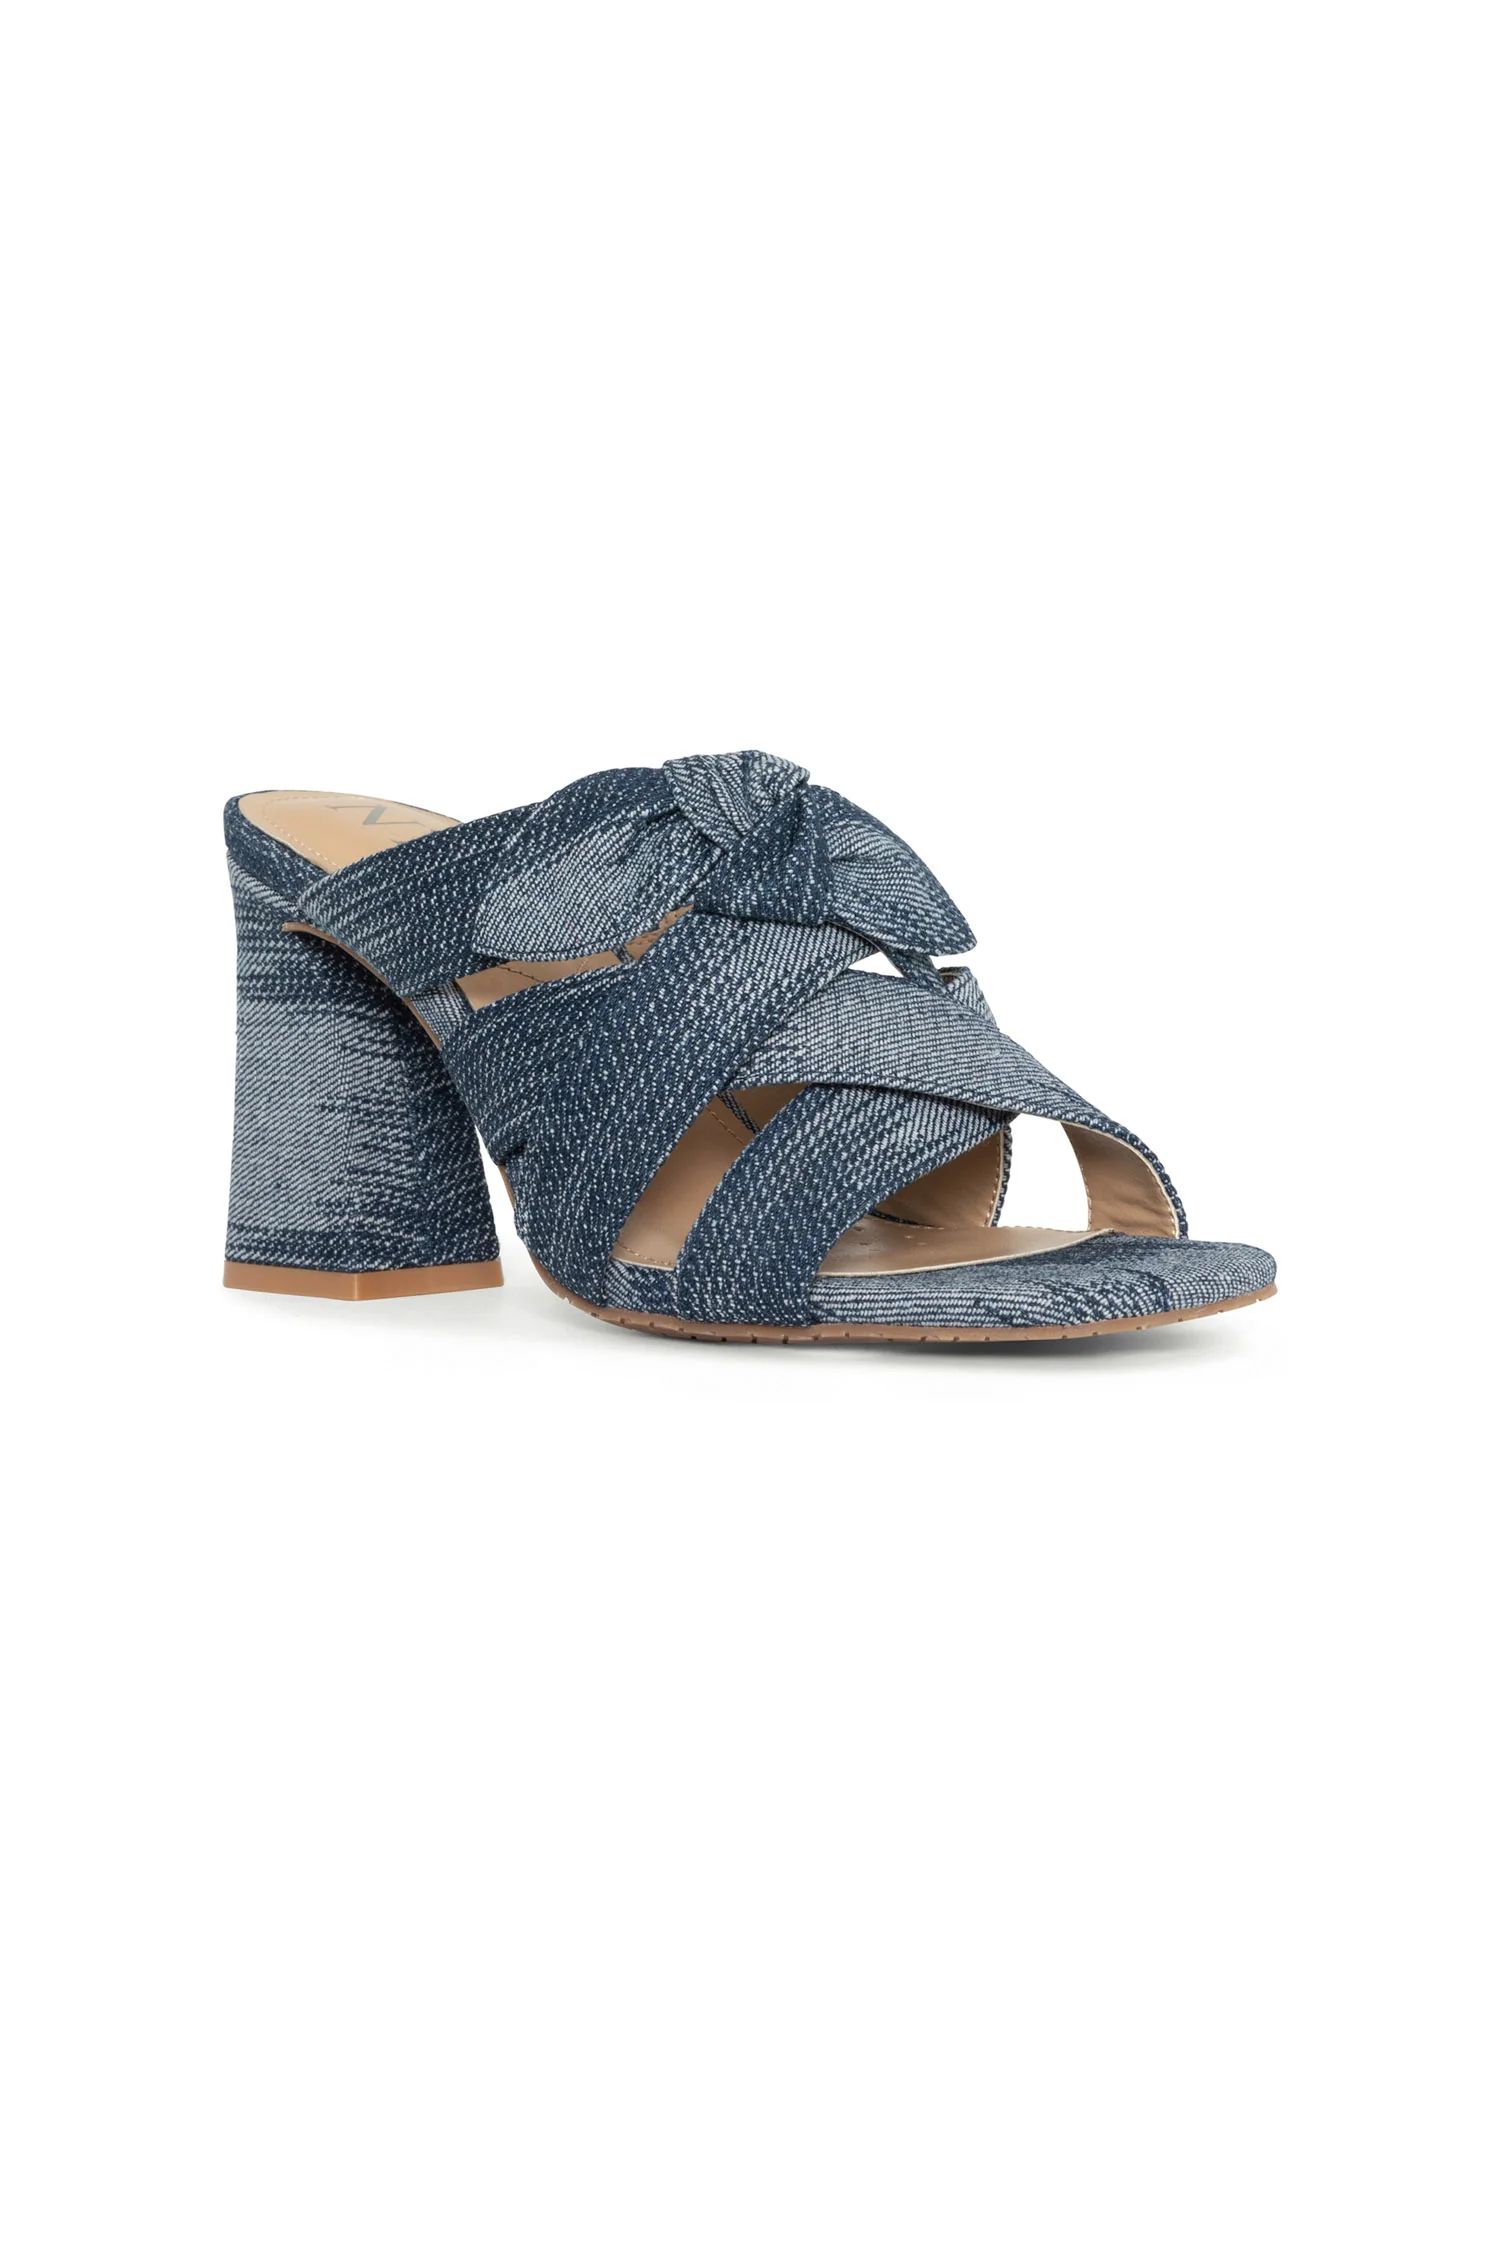 Loreri Mule Sandals - Dark Blue | NYDJ